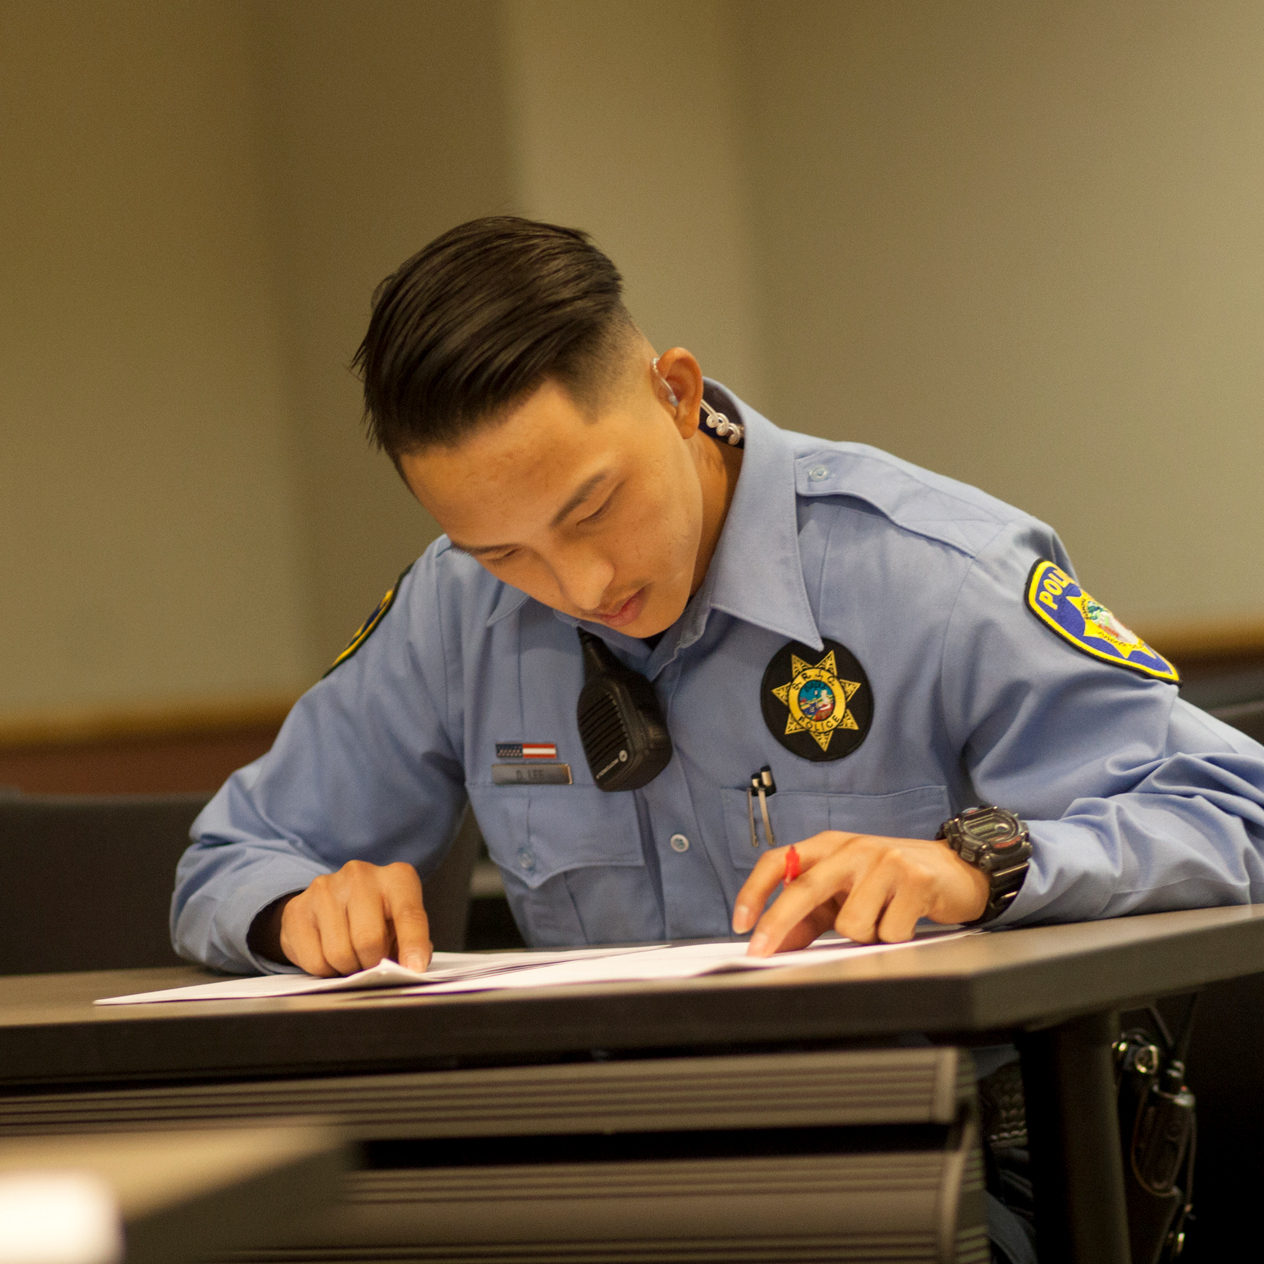 Public Safety Cadet sitting at a desk taking a test.